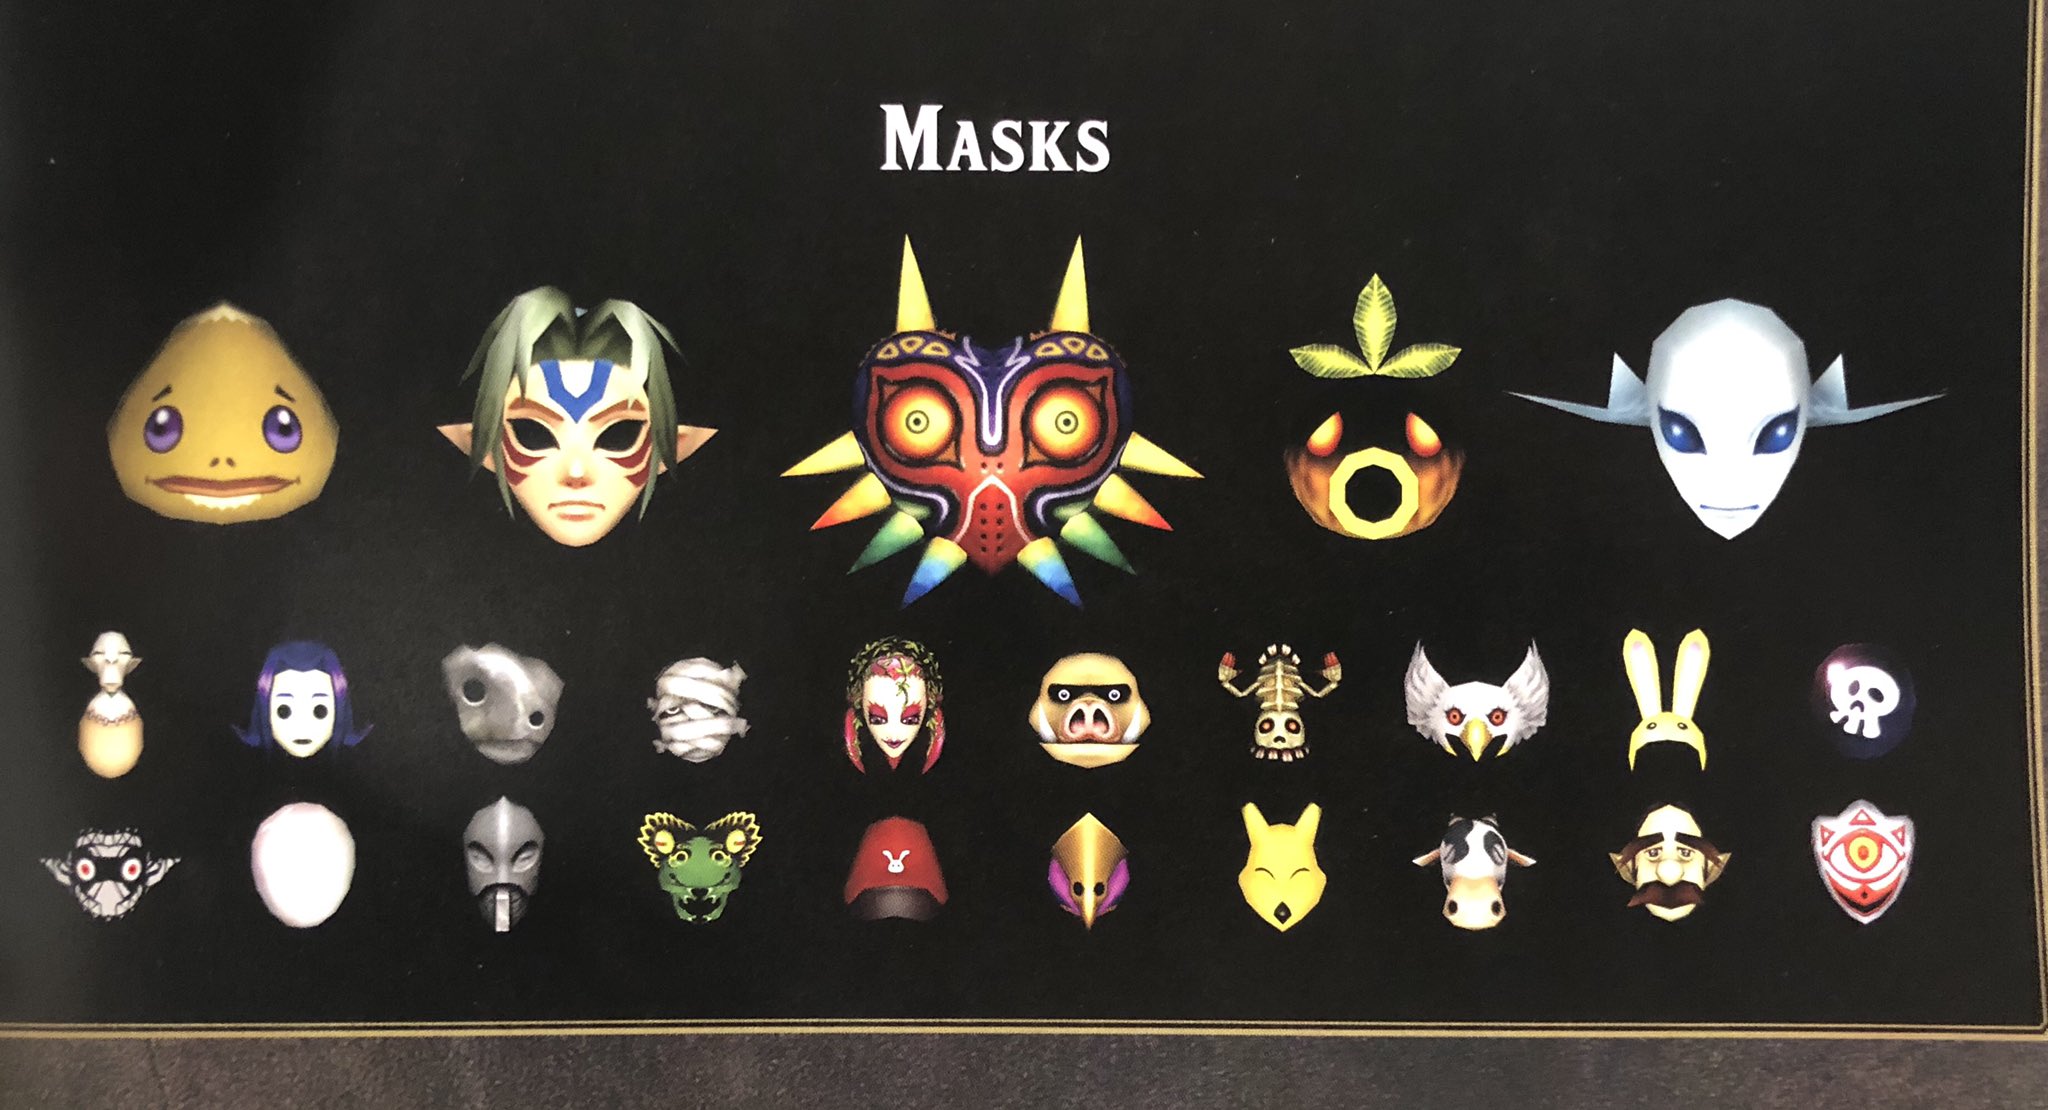 modvirke slim Faderlig Zelda Gif World on Twitter: "The masks of The Legend of Zelda: Majora's Mask  🎭 #ZeldaWeeks #MajorasMask https://t.co/RYSITl3SjD" / Twitter